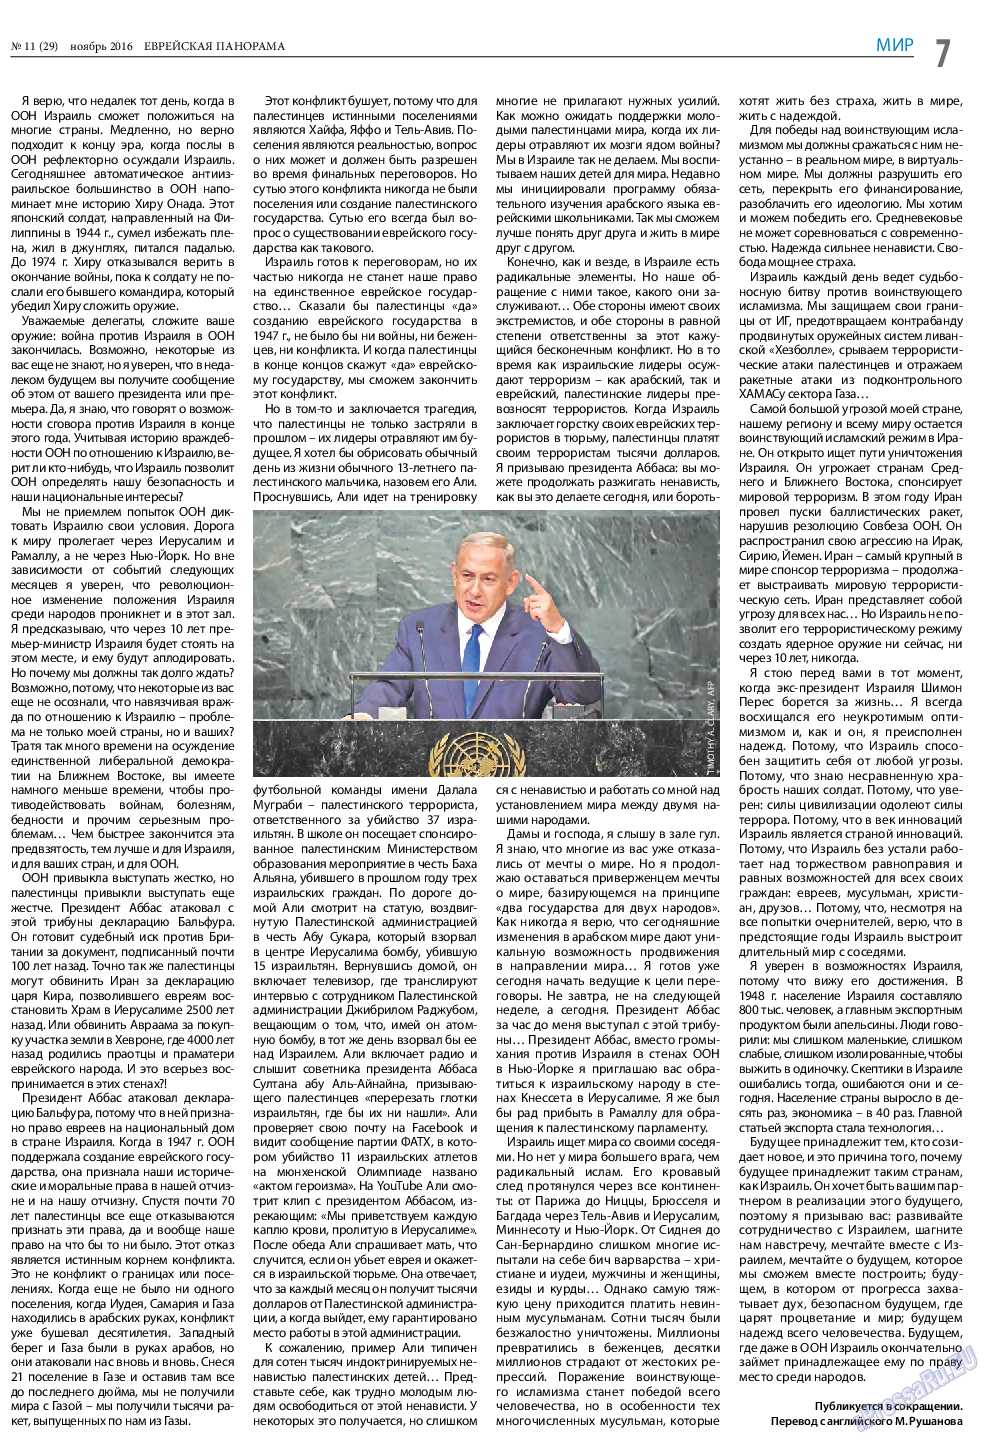 Еврейская панорама, газета. 2016 №11 стр.7